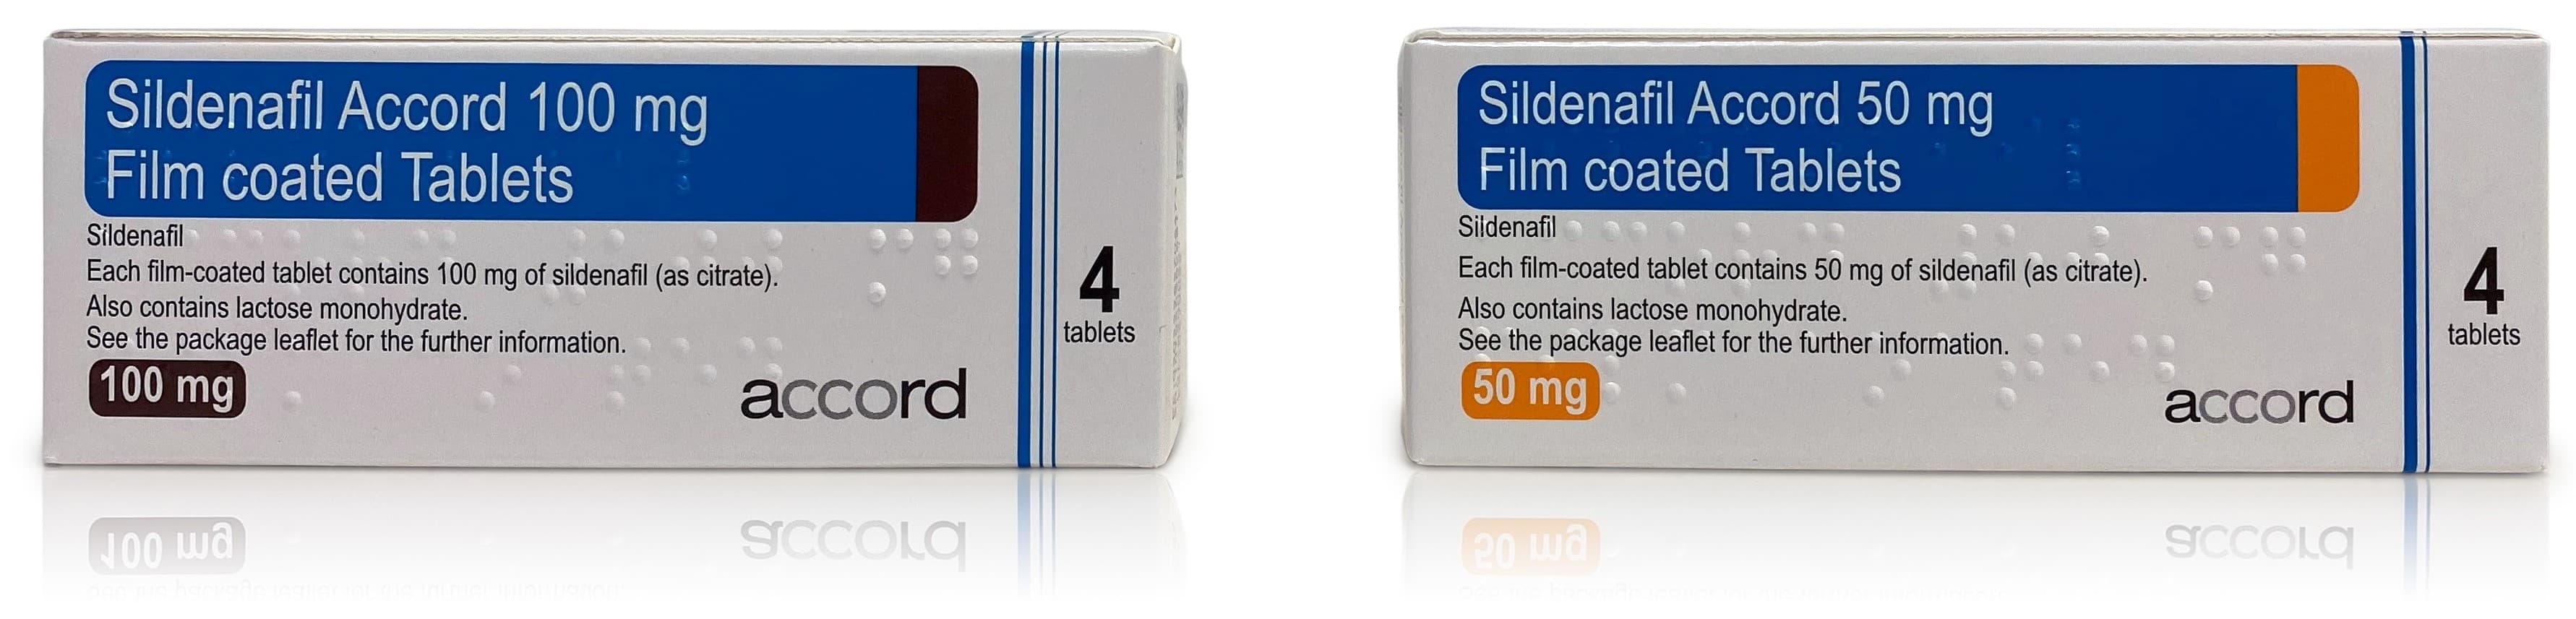 Viagra (Sildenafil) Dosage - How Much to Take?